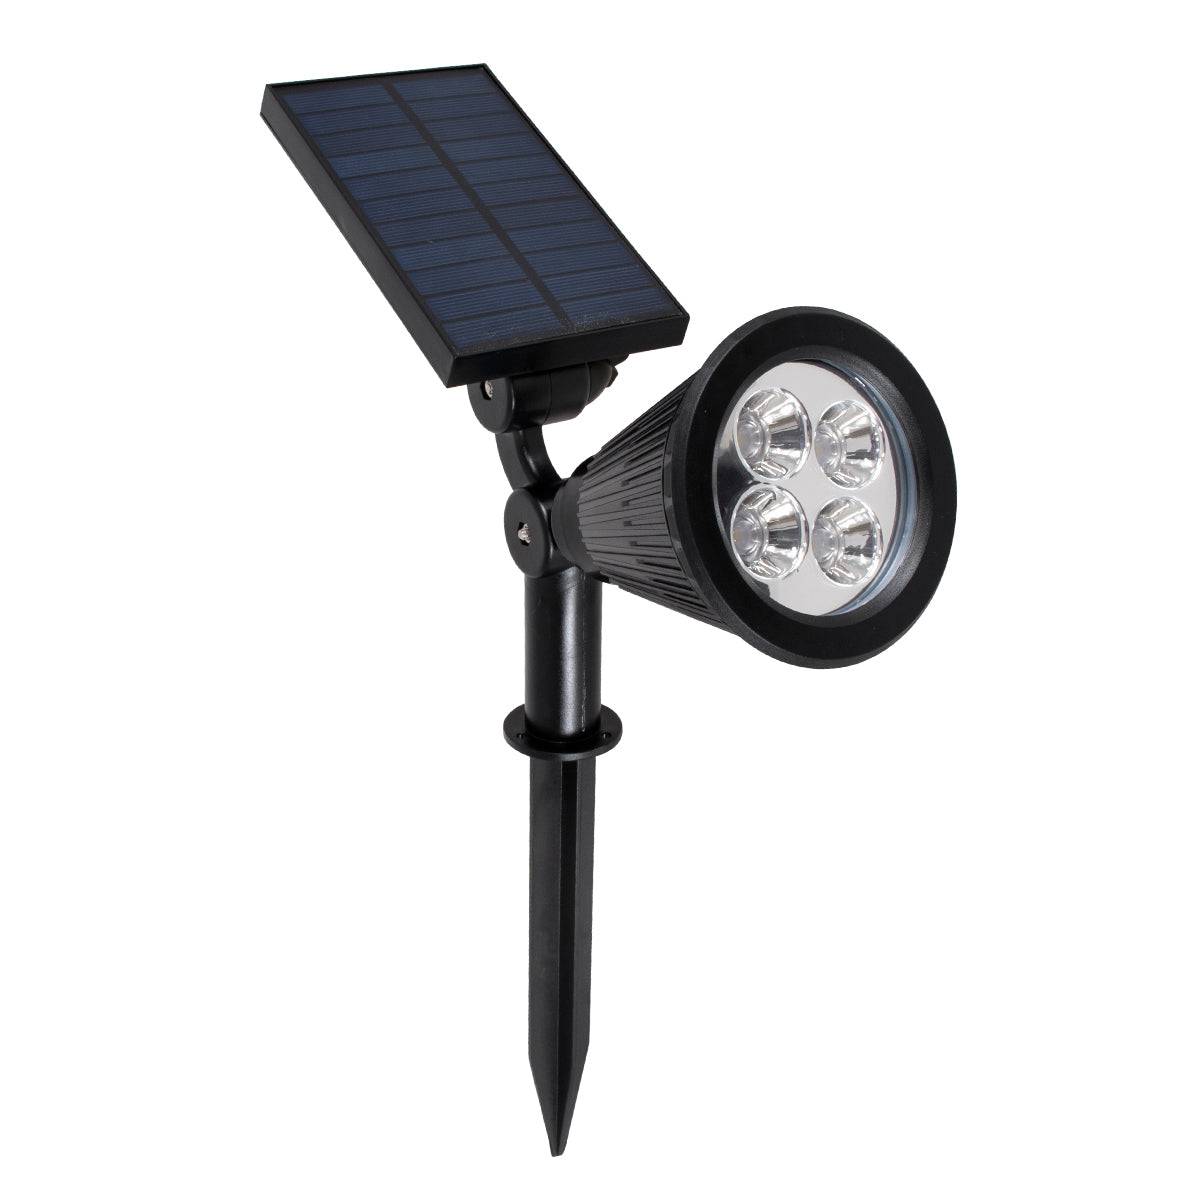 GloboStar® 85710 Μαύρο Προβολάκι Σποτ Κήπου Πλαστικό Καρφωτό LED HIGH POWER 8W 800lm με Ενσωματωμένη Μπαταρία 2200mAh - Φωτοβολταϊκό Πάνελ με Αισθητήρα Ημέρας-Νύχτας Αδιάβροχo IP67 Ψυχρό Λευκό 6000K - ledmania.gr